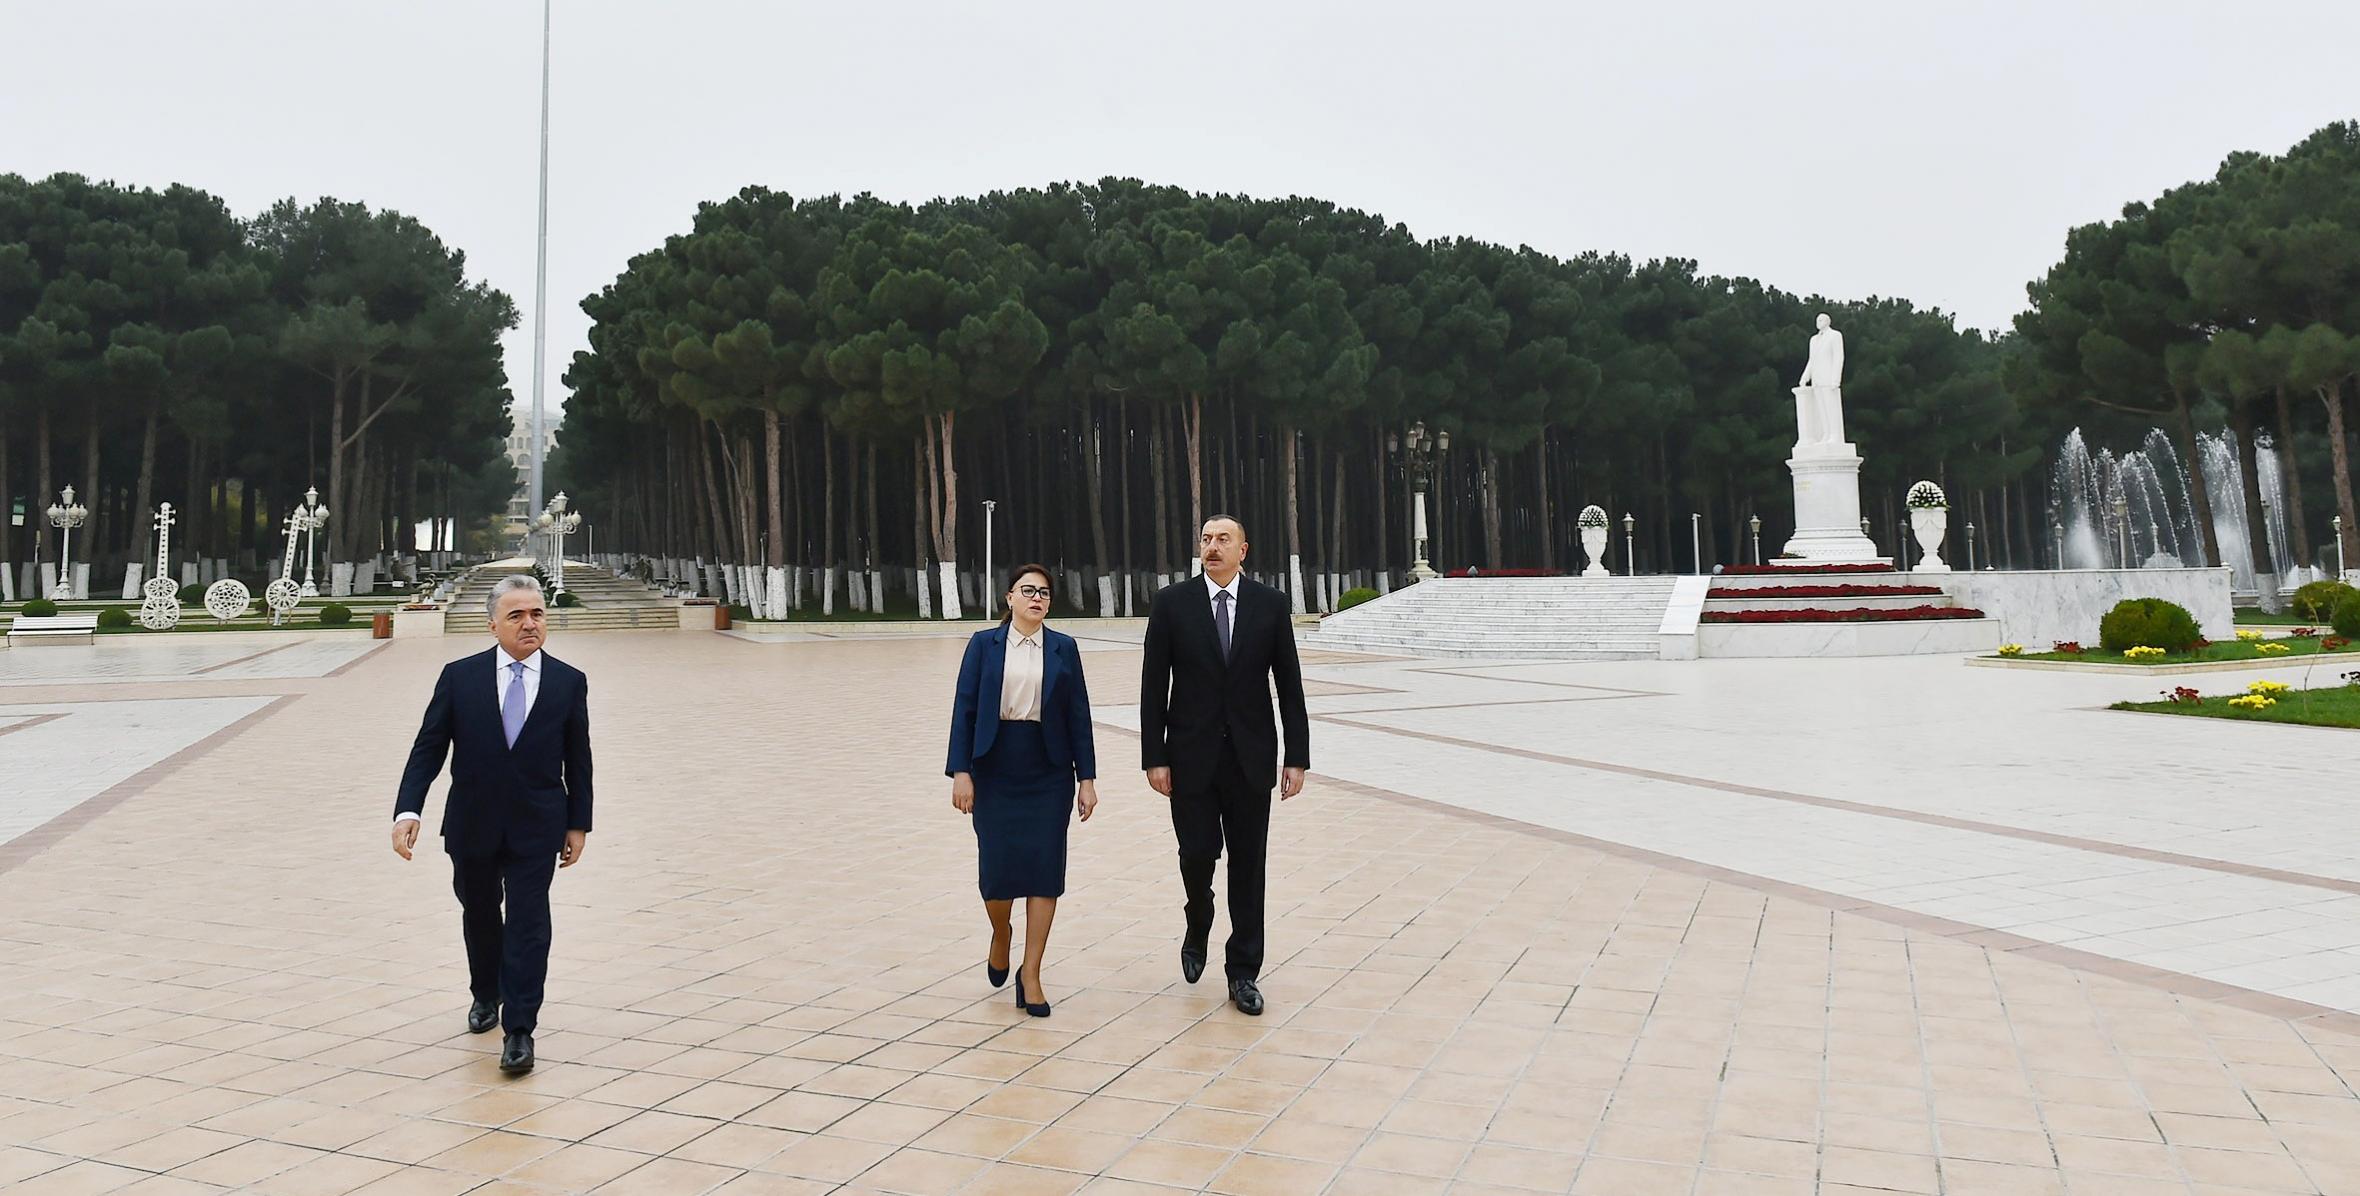 Ilham Aliyev arrived in Absheron district